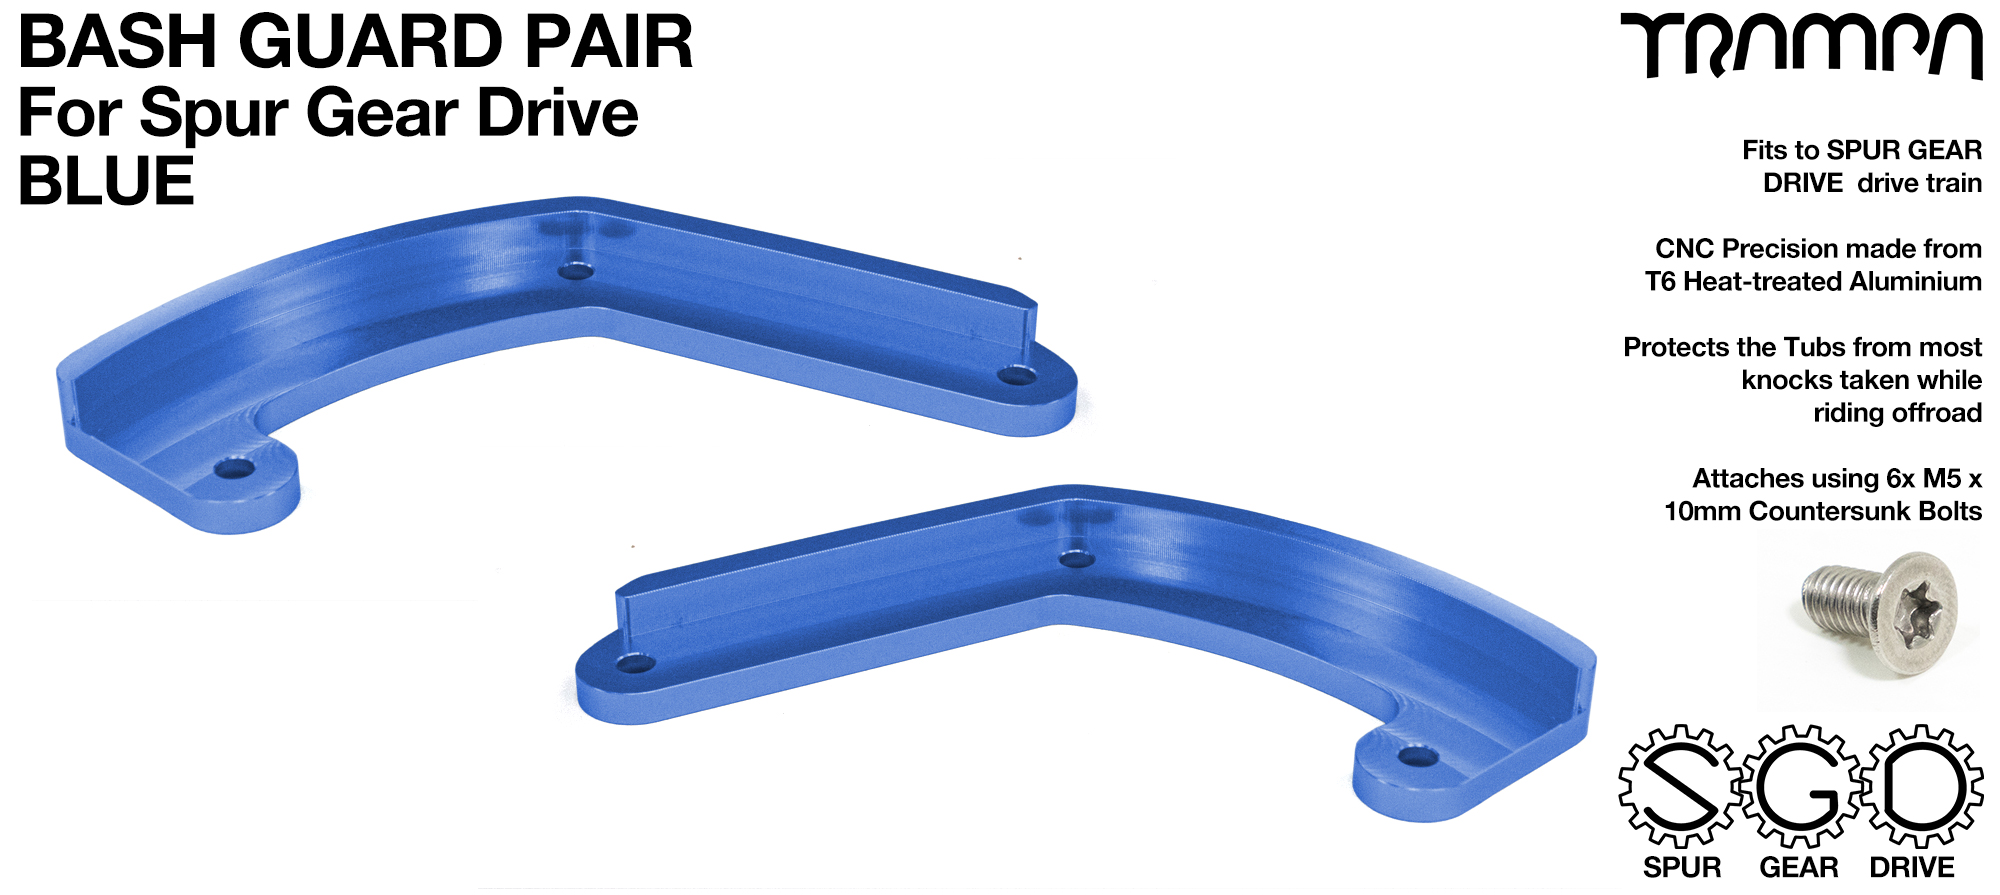 MkII Spur Gear Drive Bash Guards PAIR - BLUE